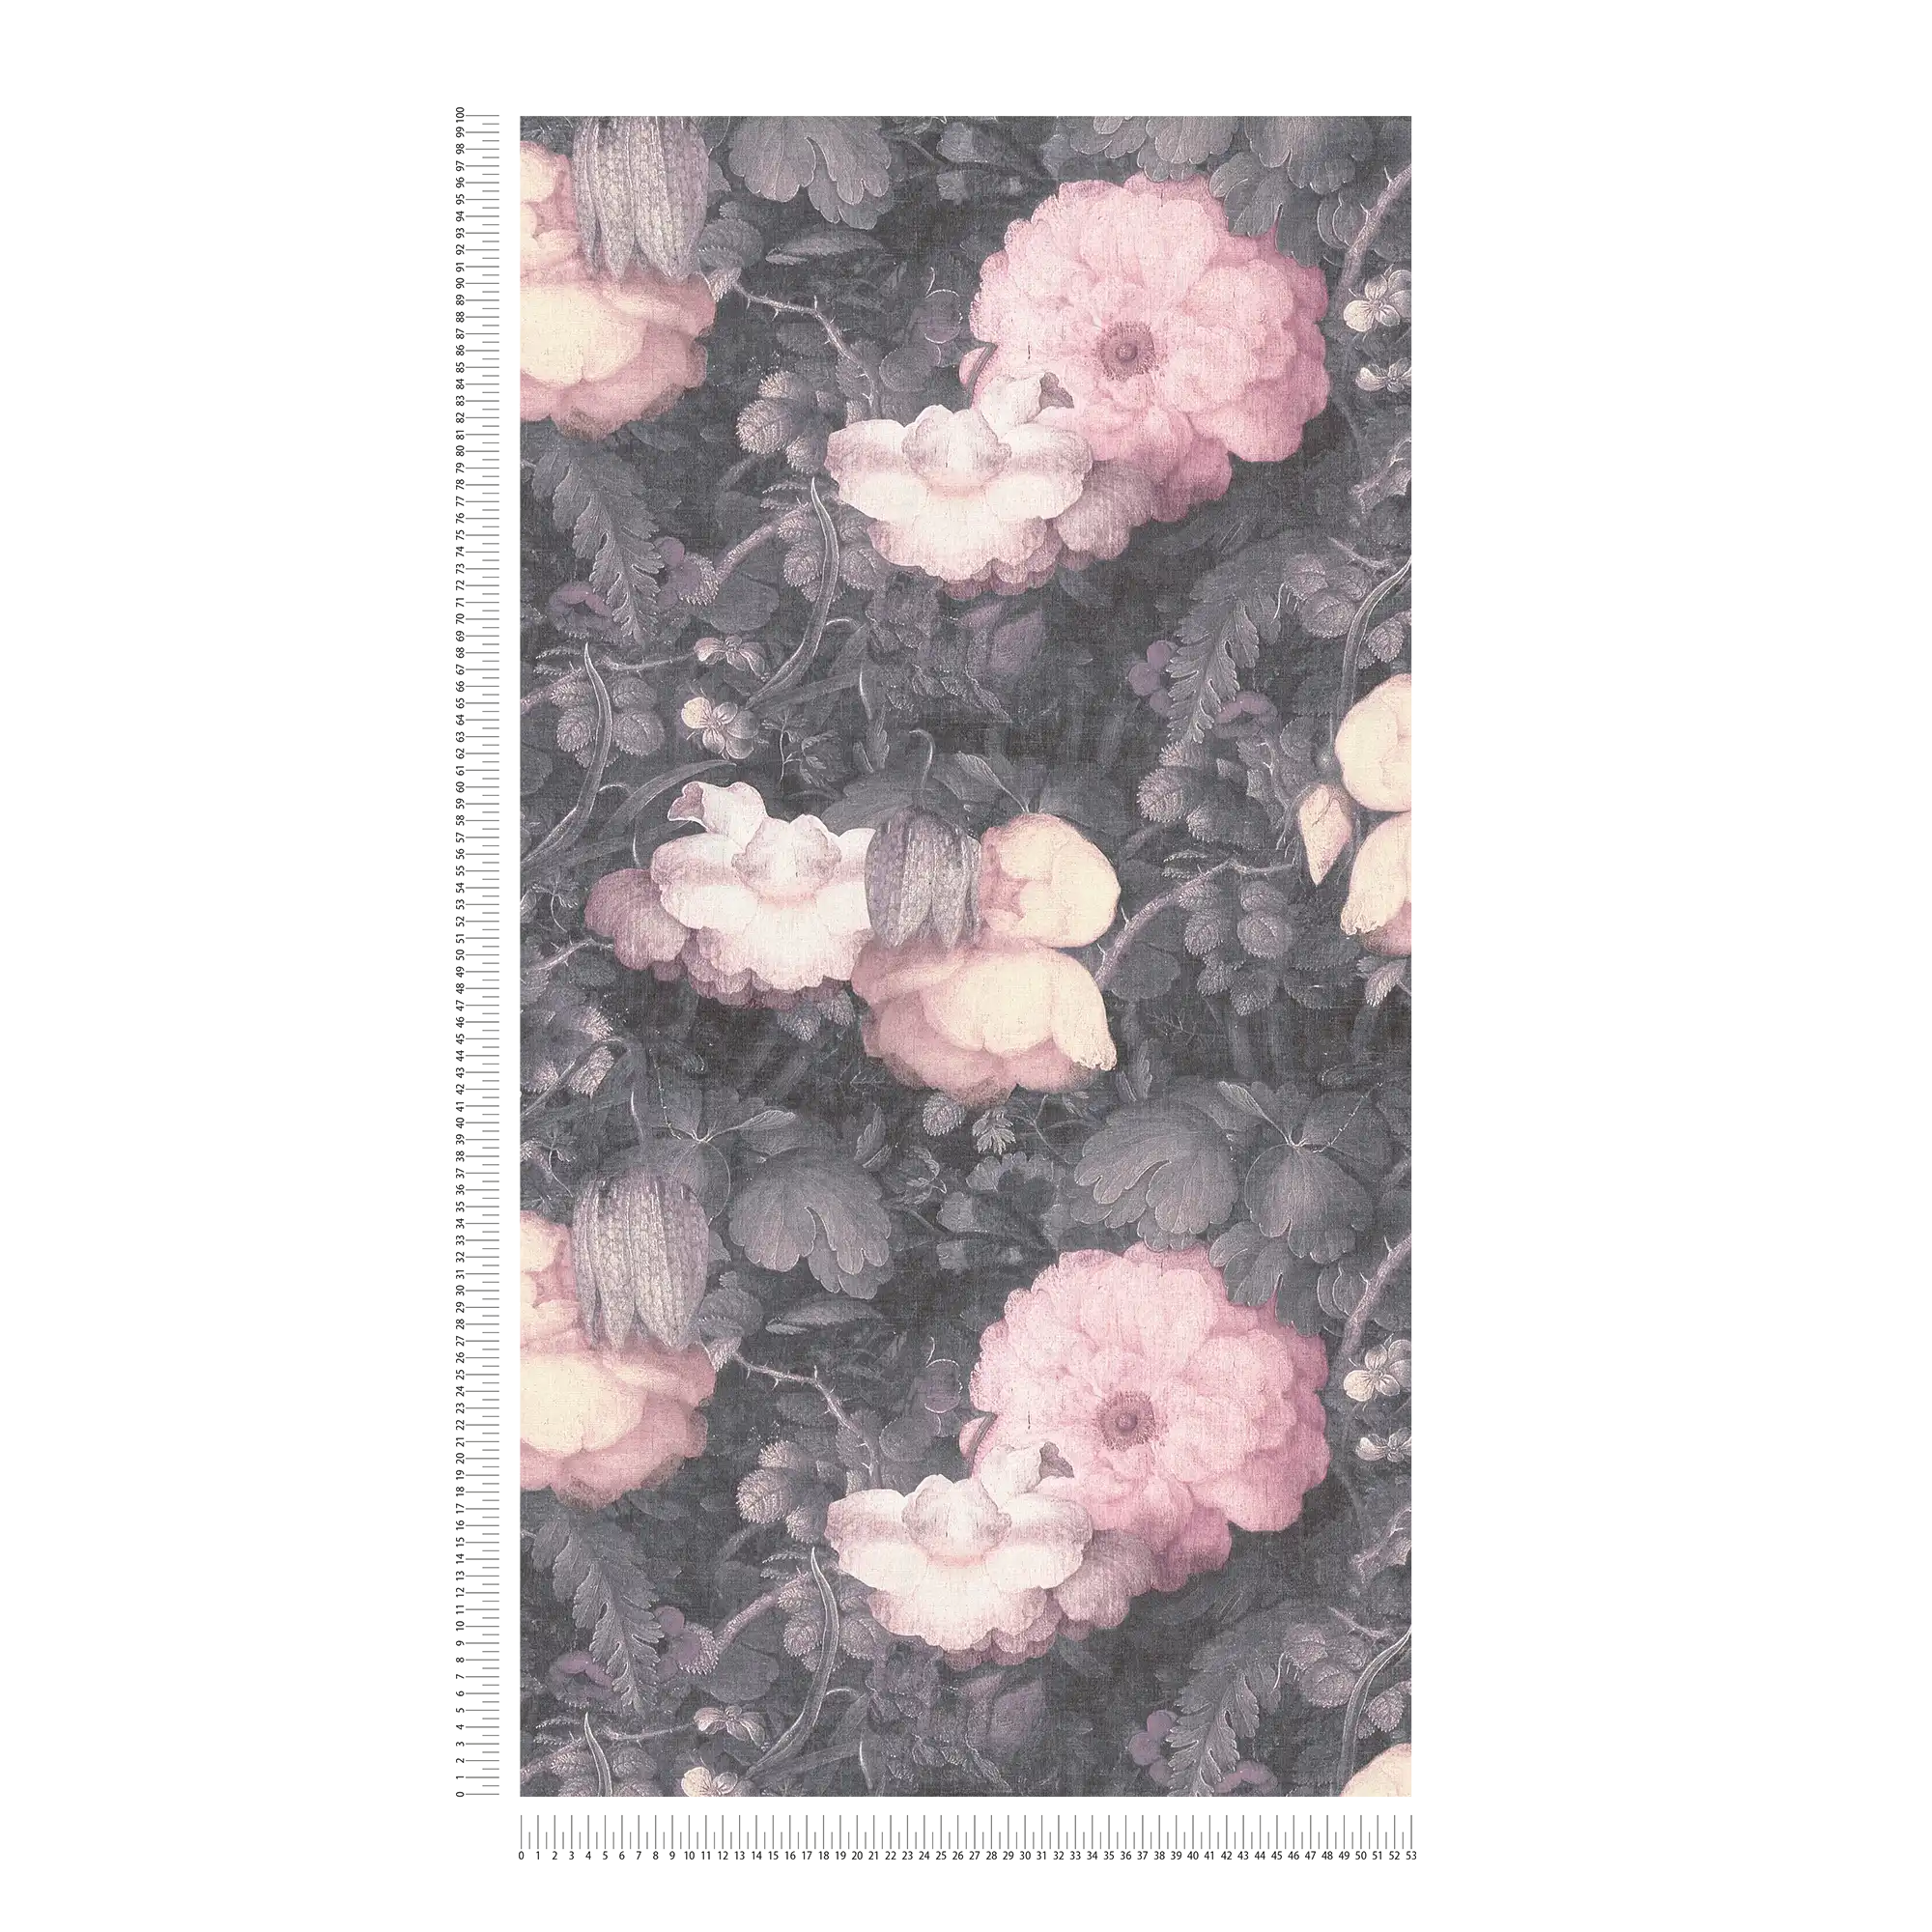             Papel pintado floral estilo pintura, aspecto de lienzo - gris, rosa, negro
        